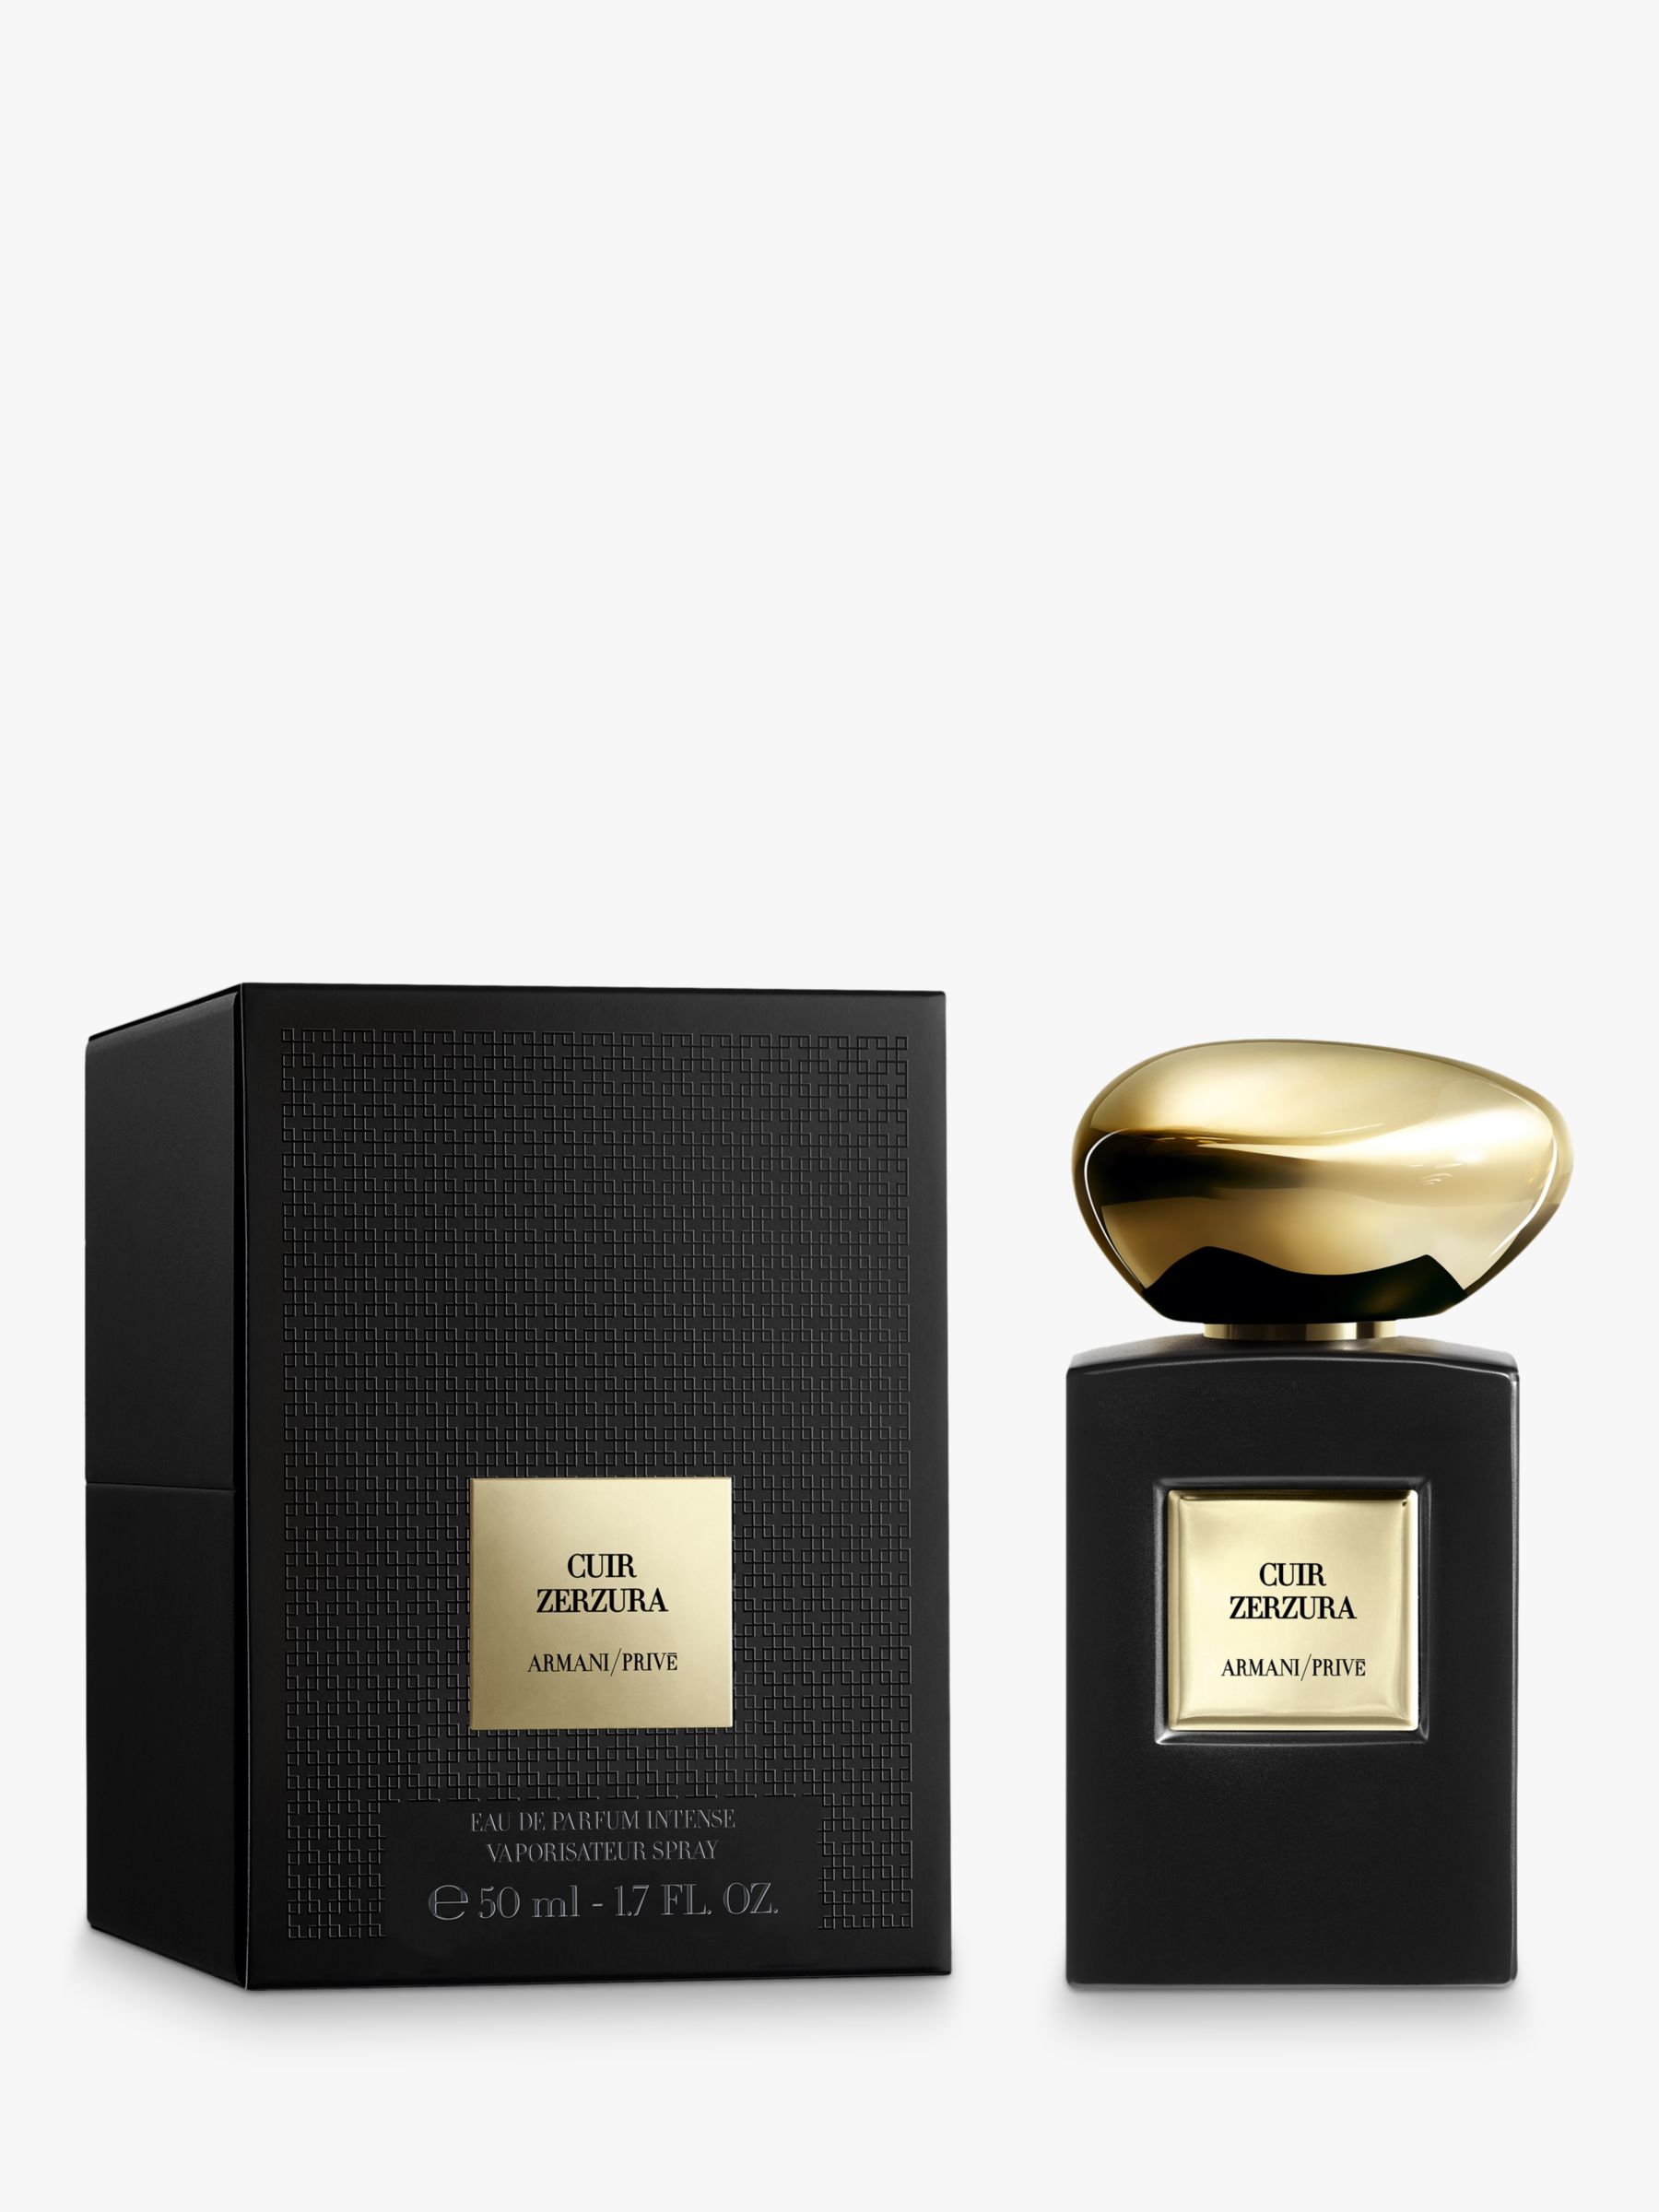 Giorgio Armani / Privé Cuir Zerzura Eau de Parfum Intense, 50ml at John  Lewis & Partners